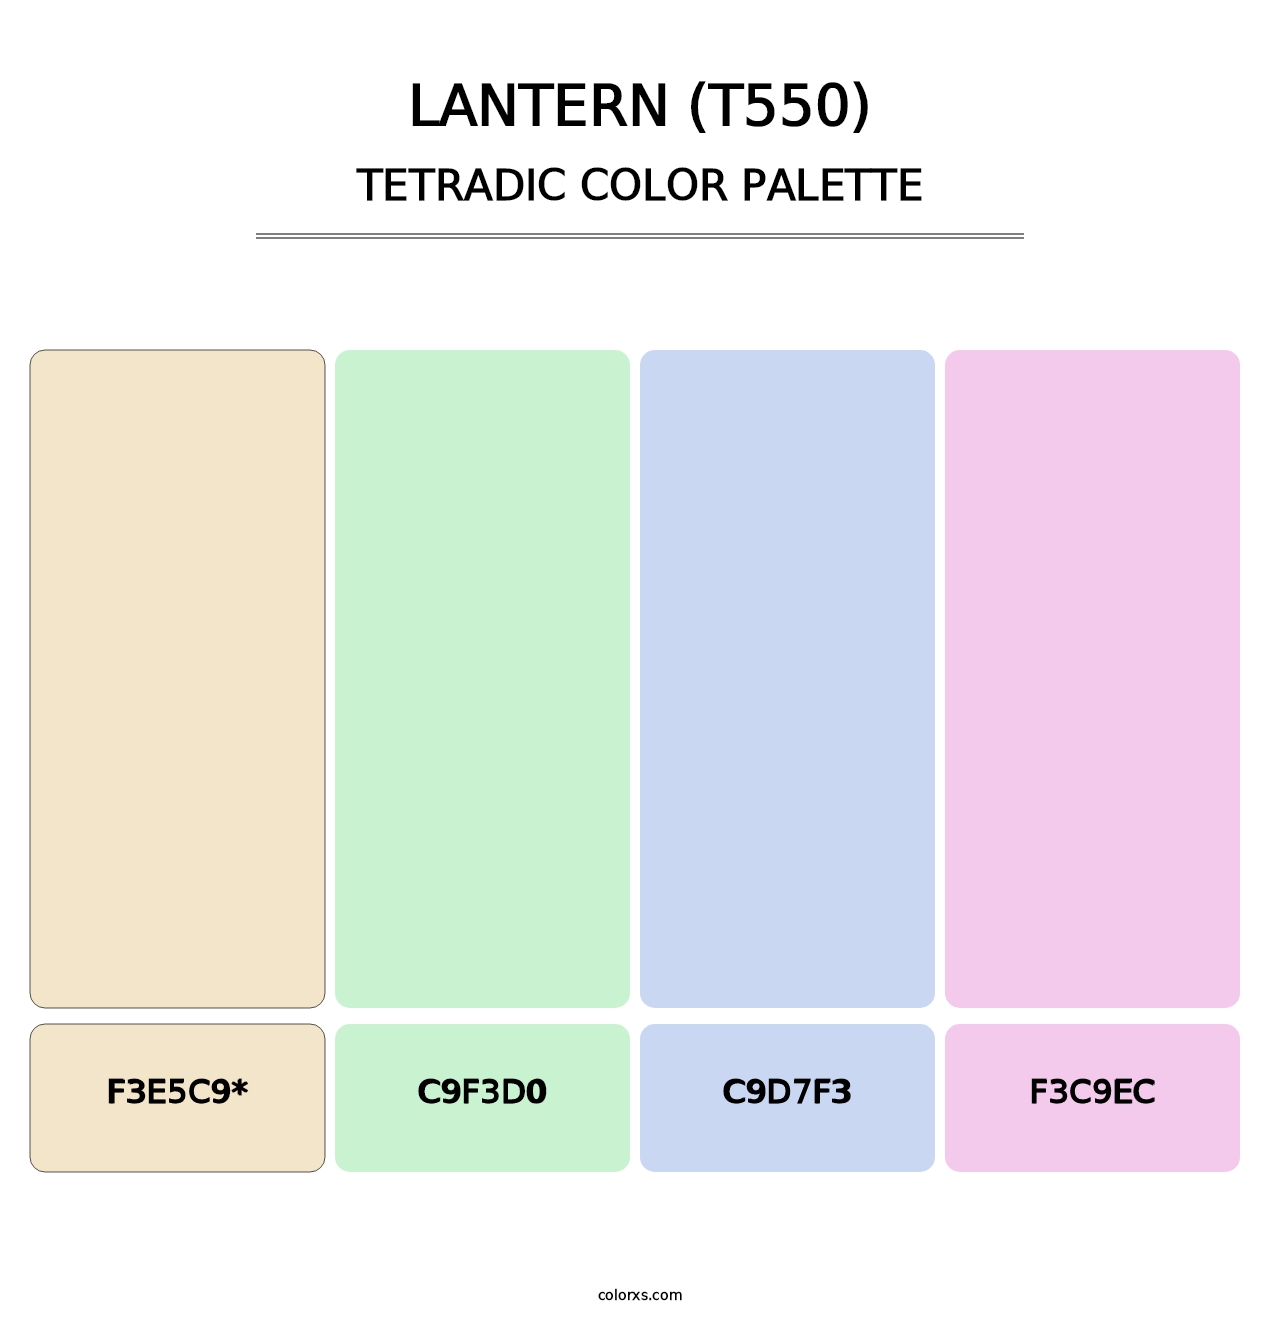 Lantern (T550) - Tetradic Color Palette